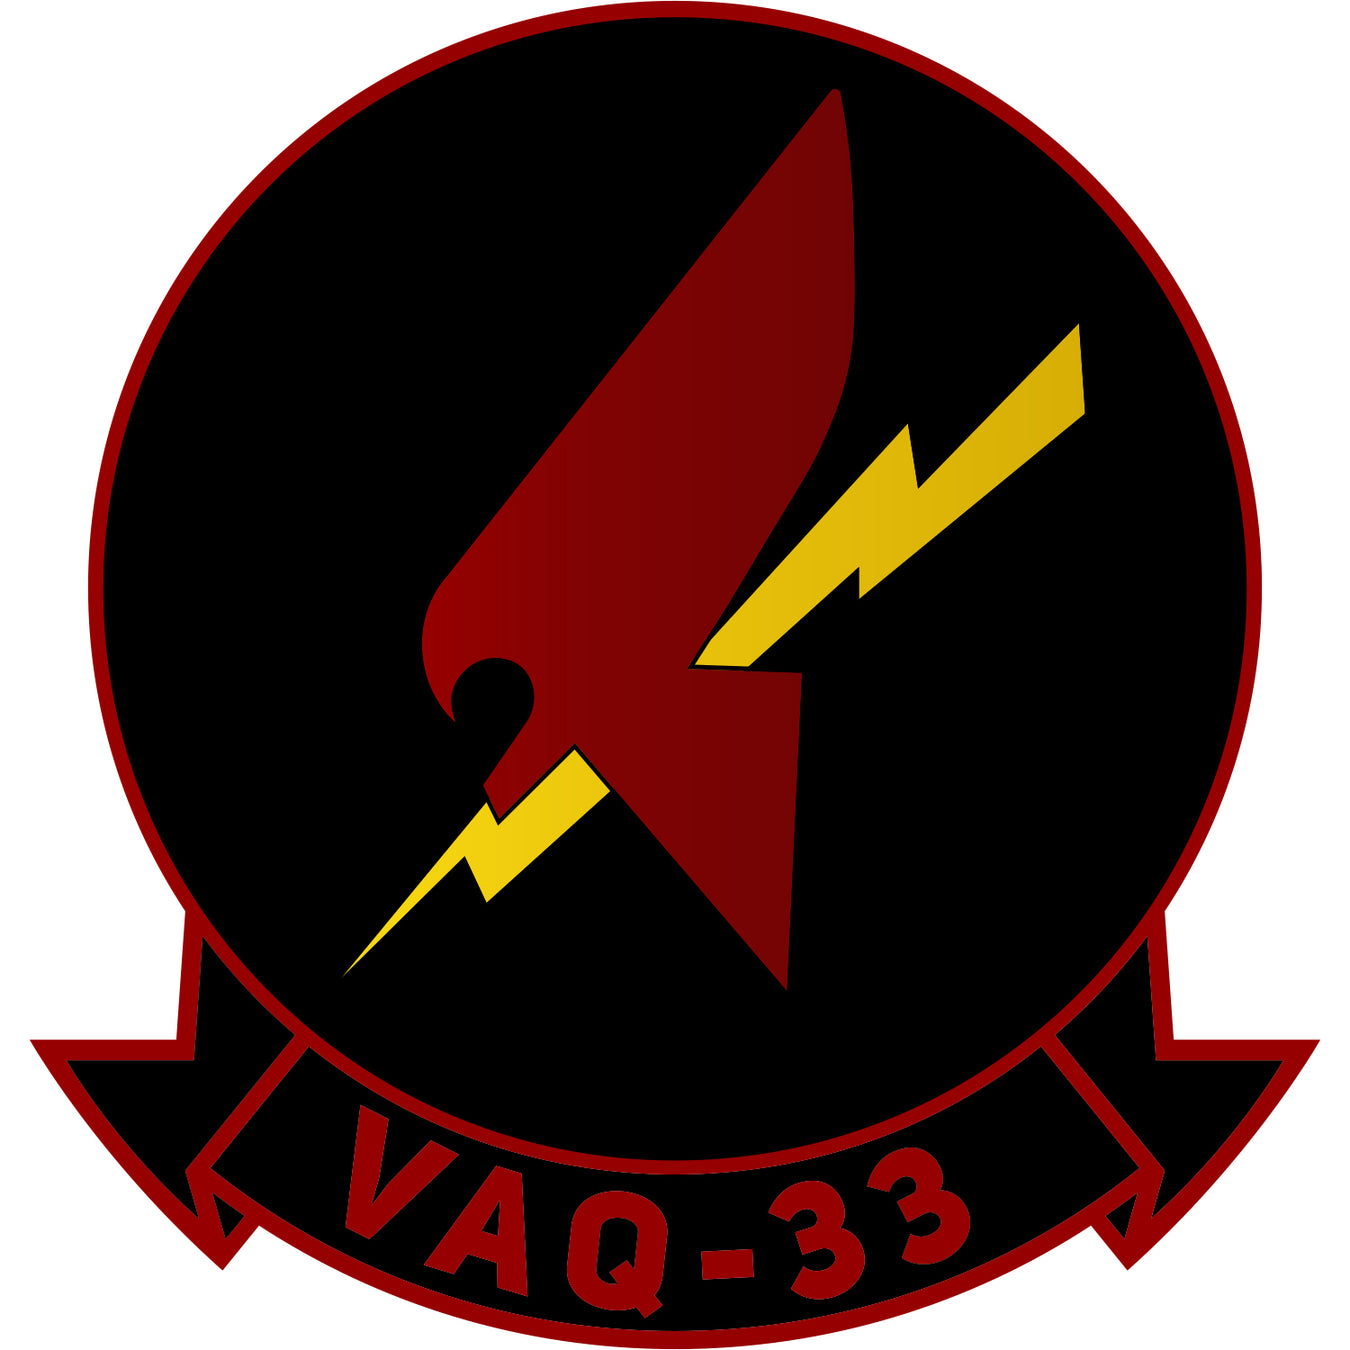 Electronic Attack Squadron 33 (VAQ-33)